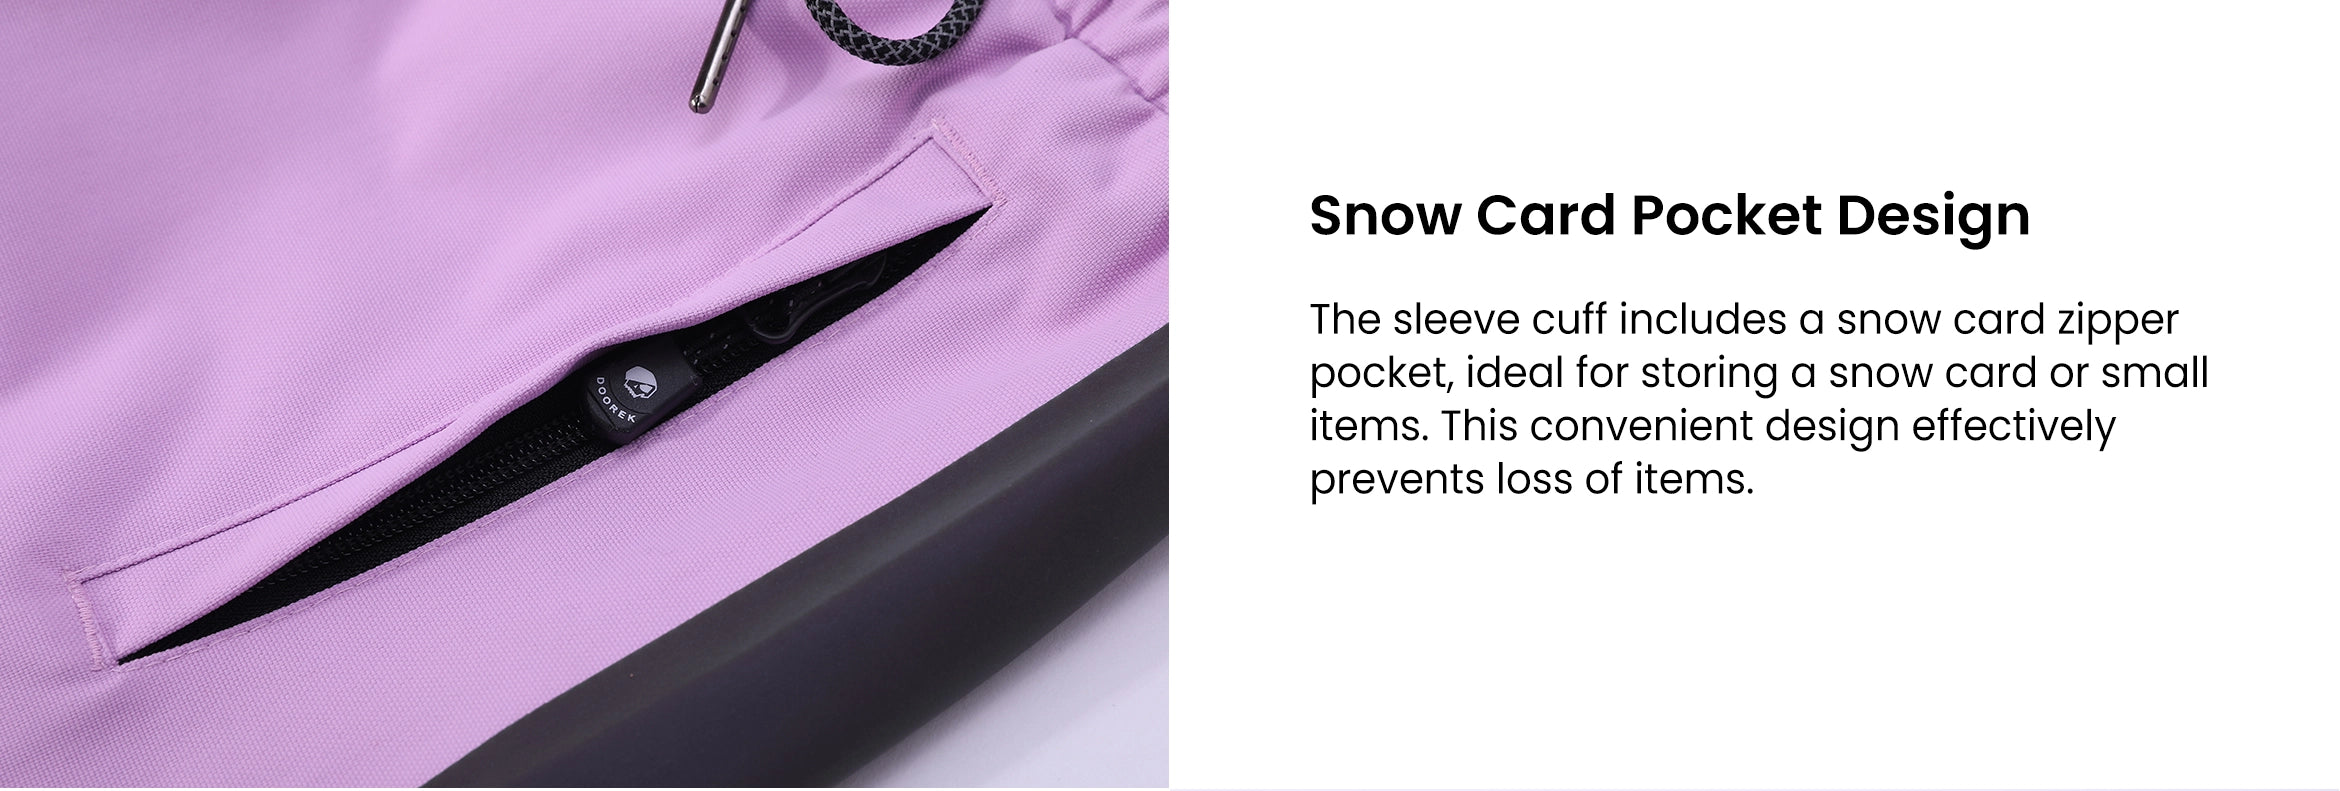 6. Snow Card Pocket Design